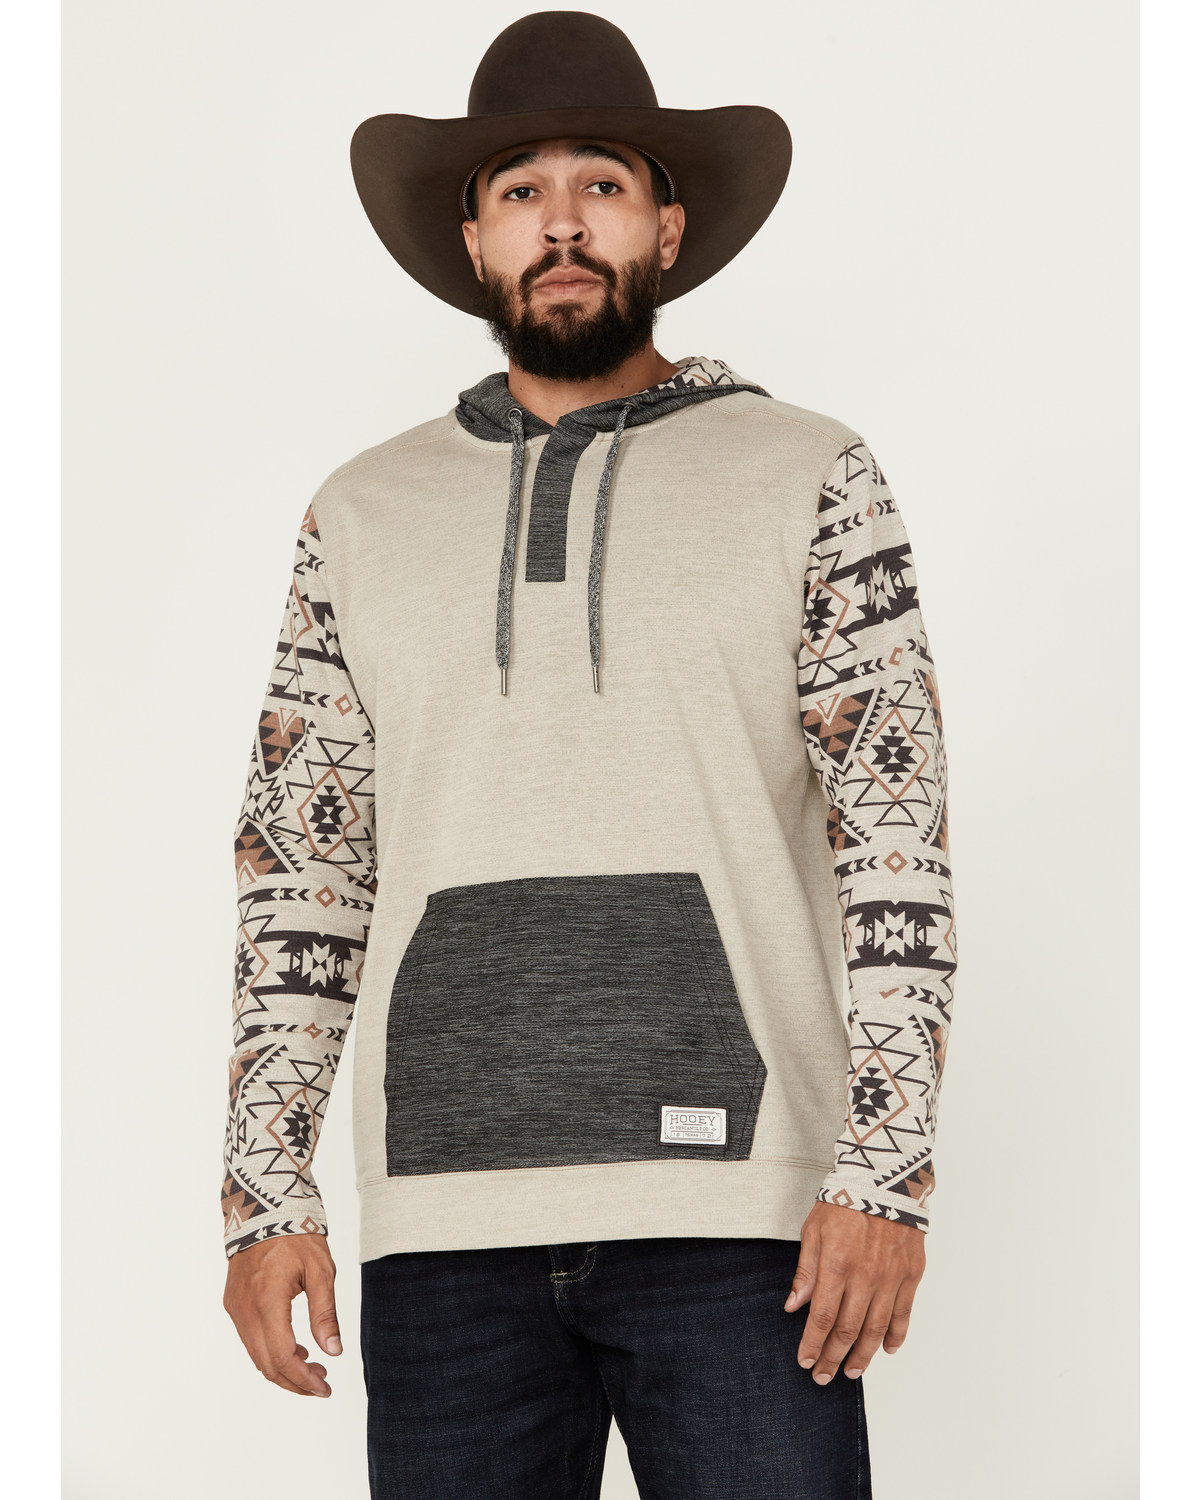 Hooey Men's Southwestern Color Block Hooded Sweatshirt